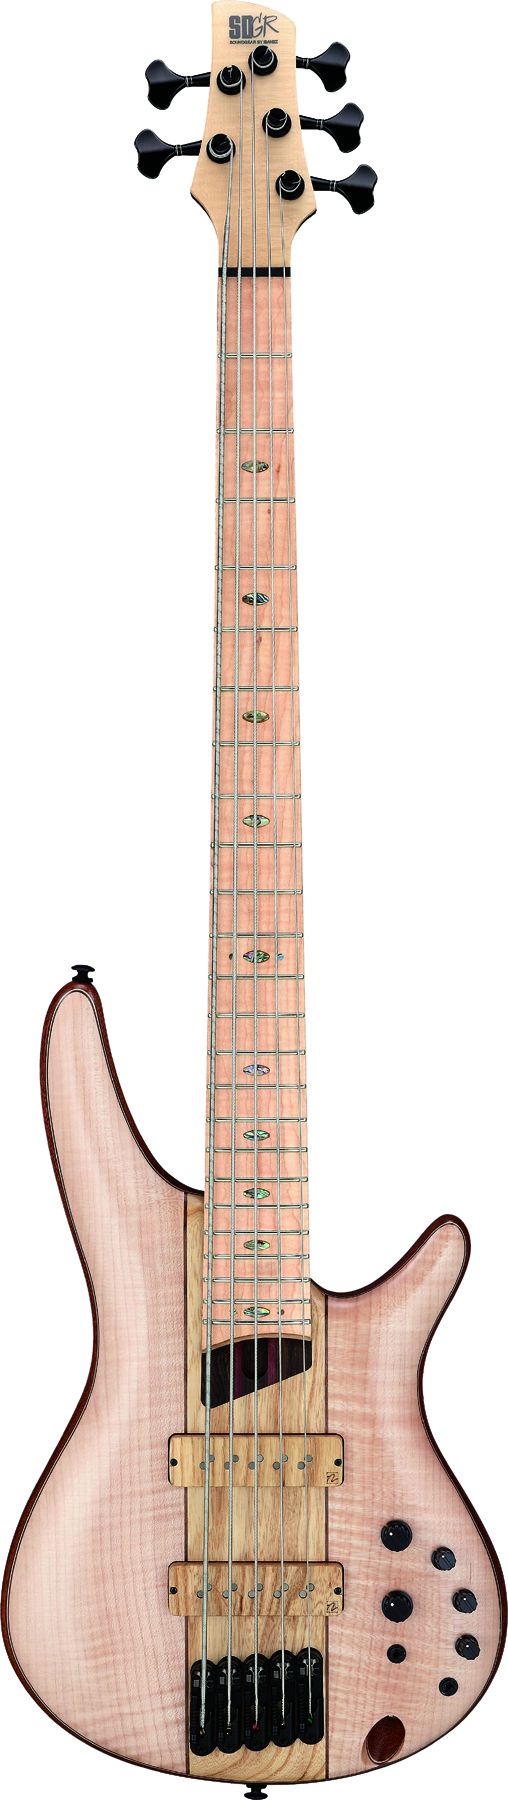 Ibanez SR Premium Series Nordstrand 5 String Electric Bass Guitar 